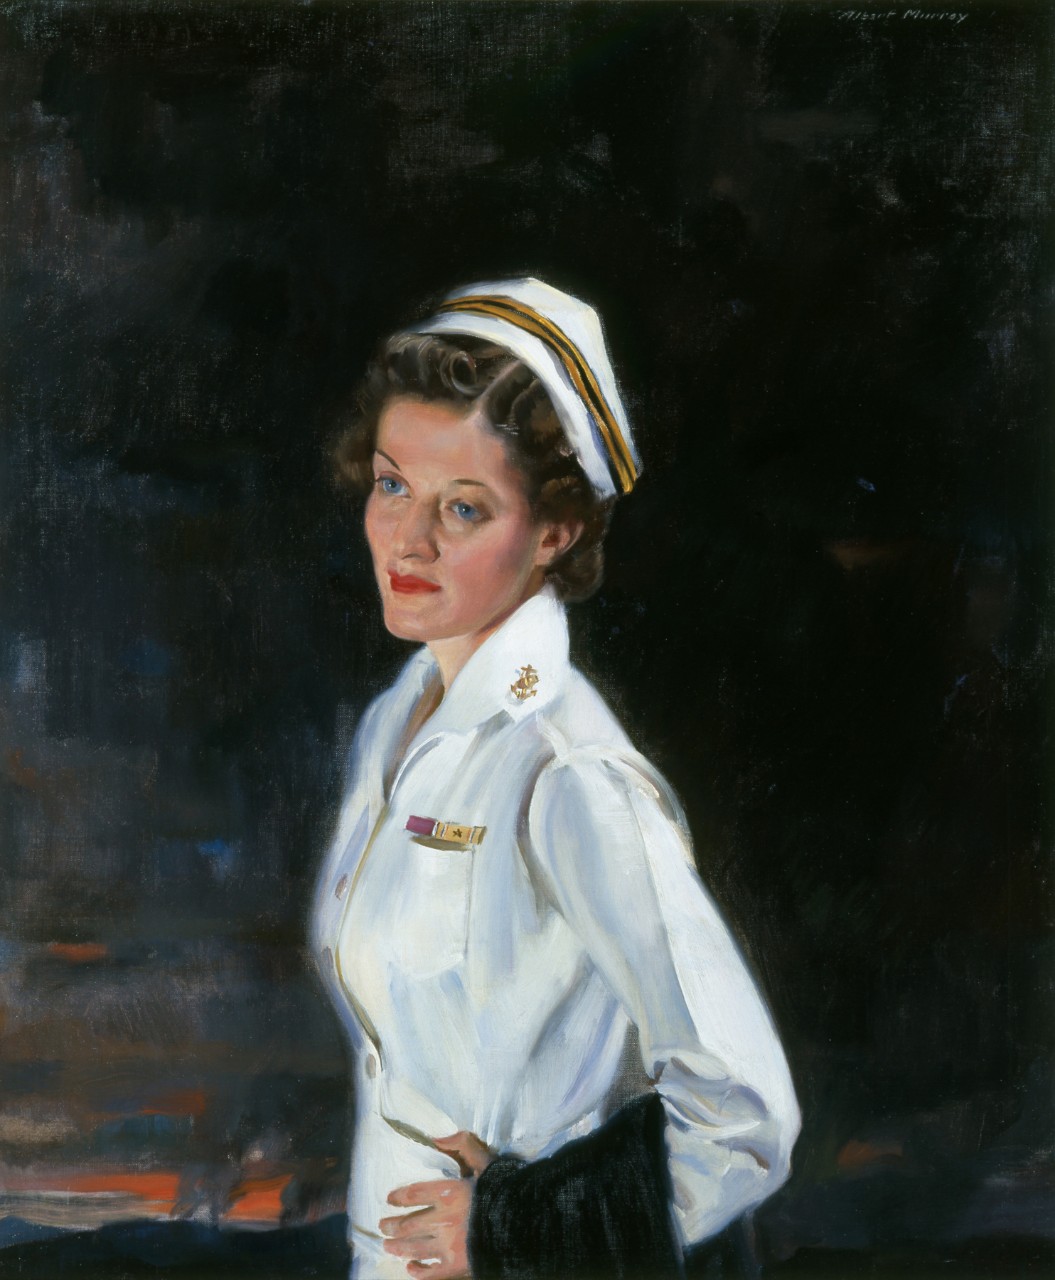  Ann Bernatitus in a white nurses uniform